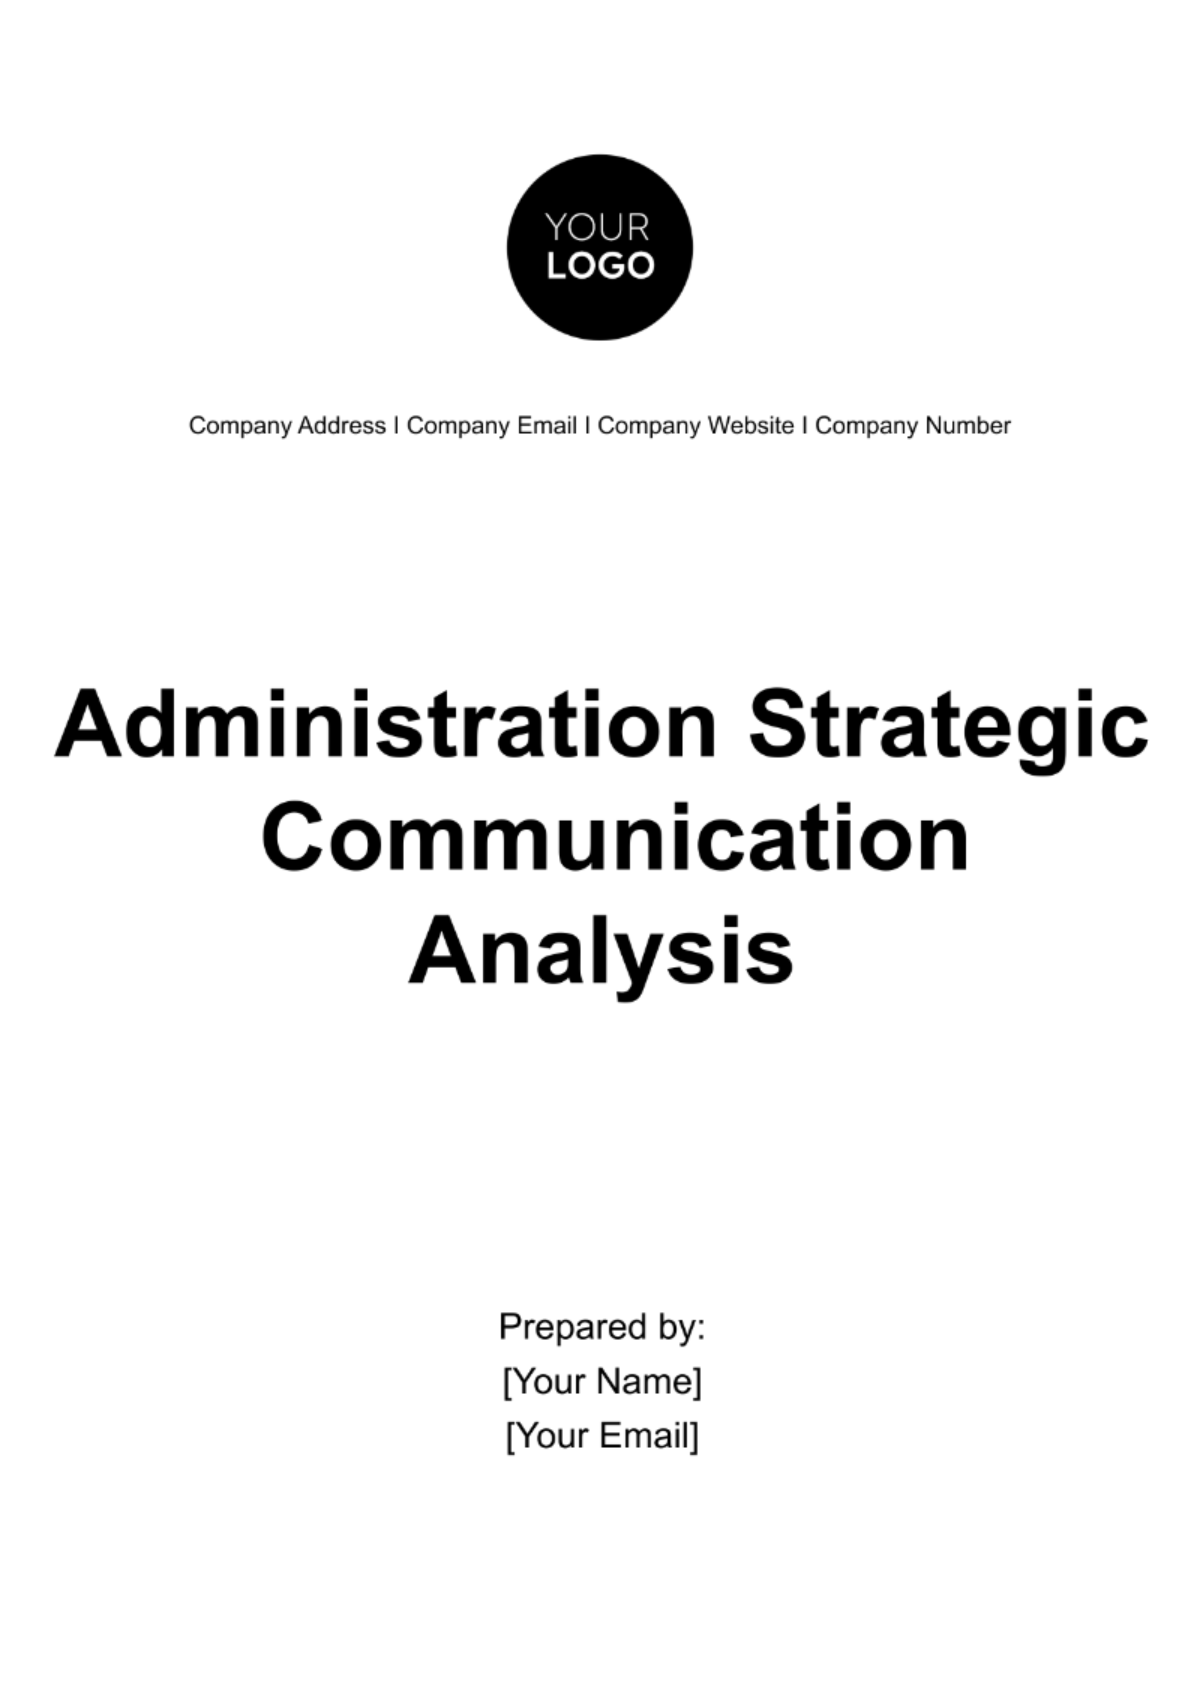 Administration Strategic Communication Analysis Template